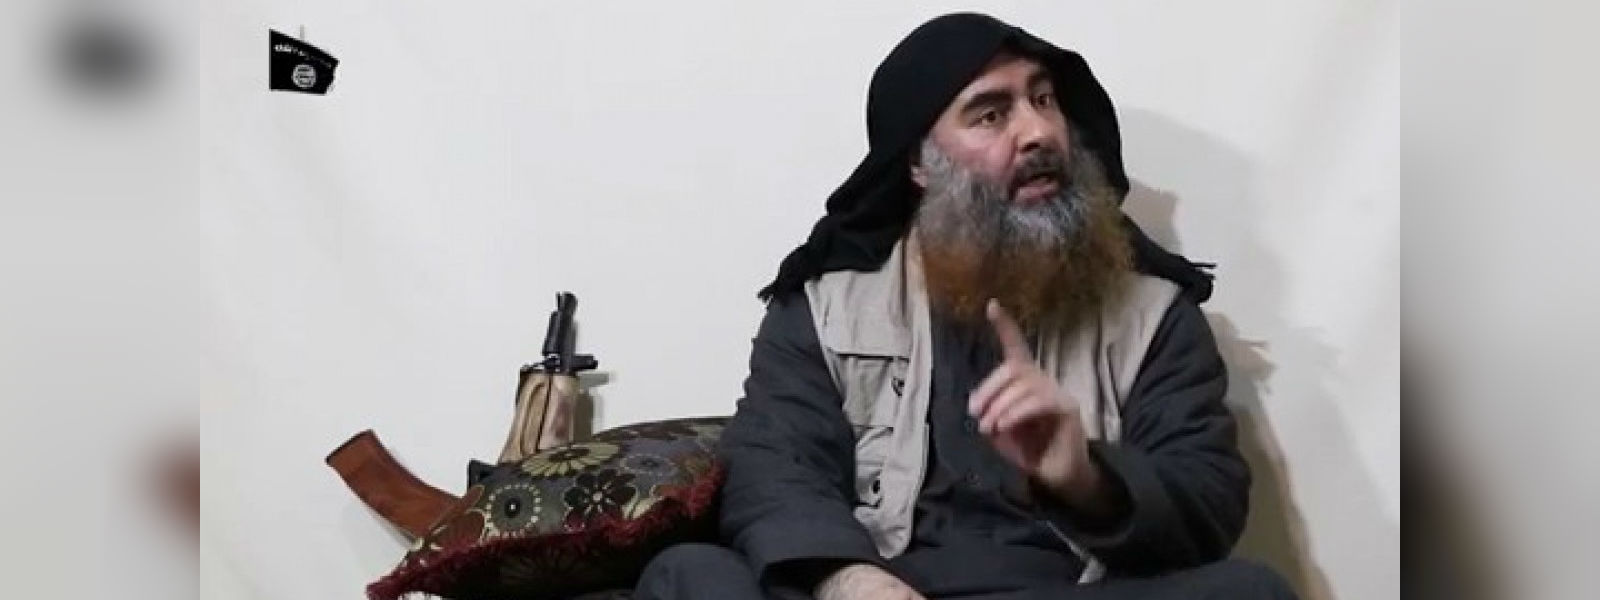 ISIS leader Abu Bakr al-Baghdadi has been killed: reports